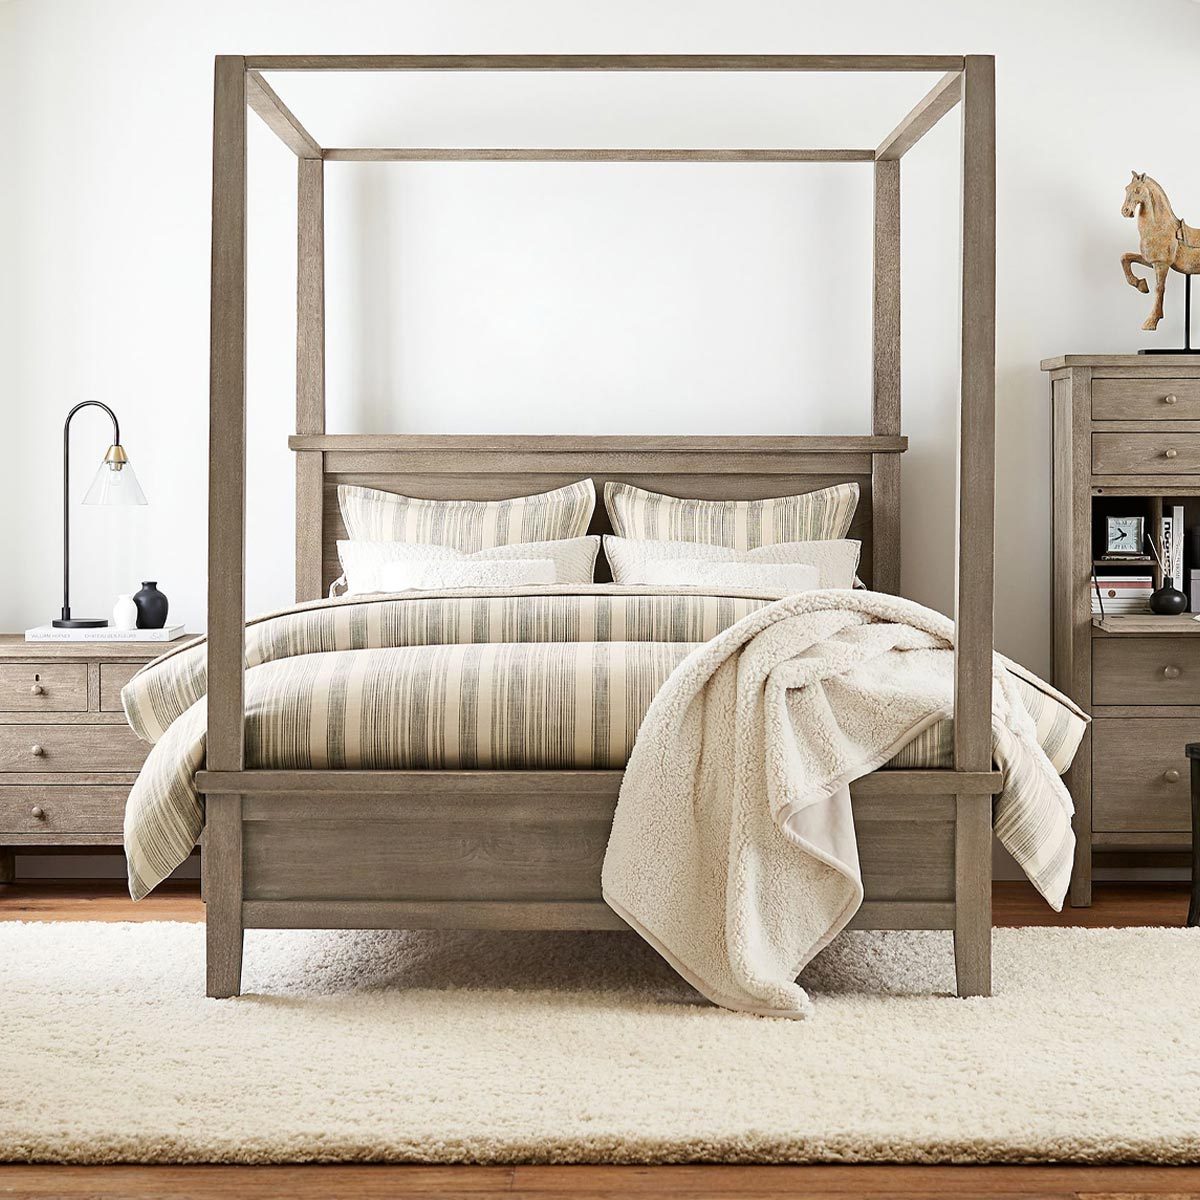 The 6 Best Bed Frames Framework For A Good Night's Rest